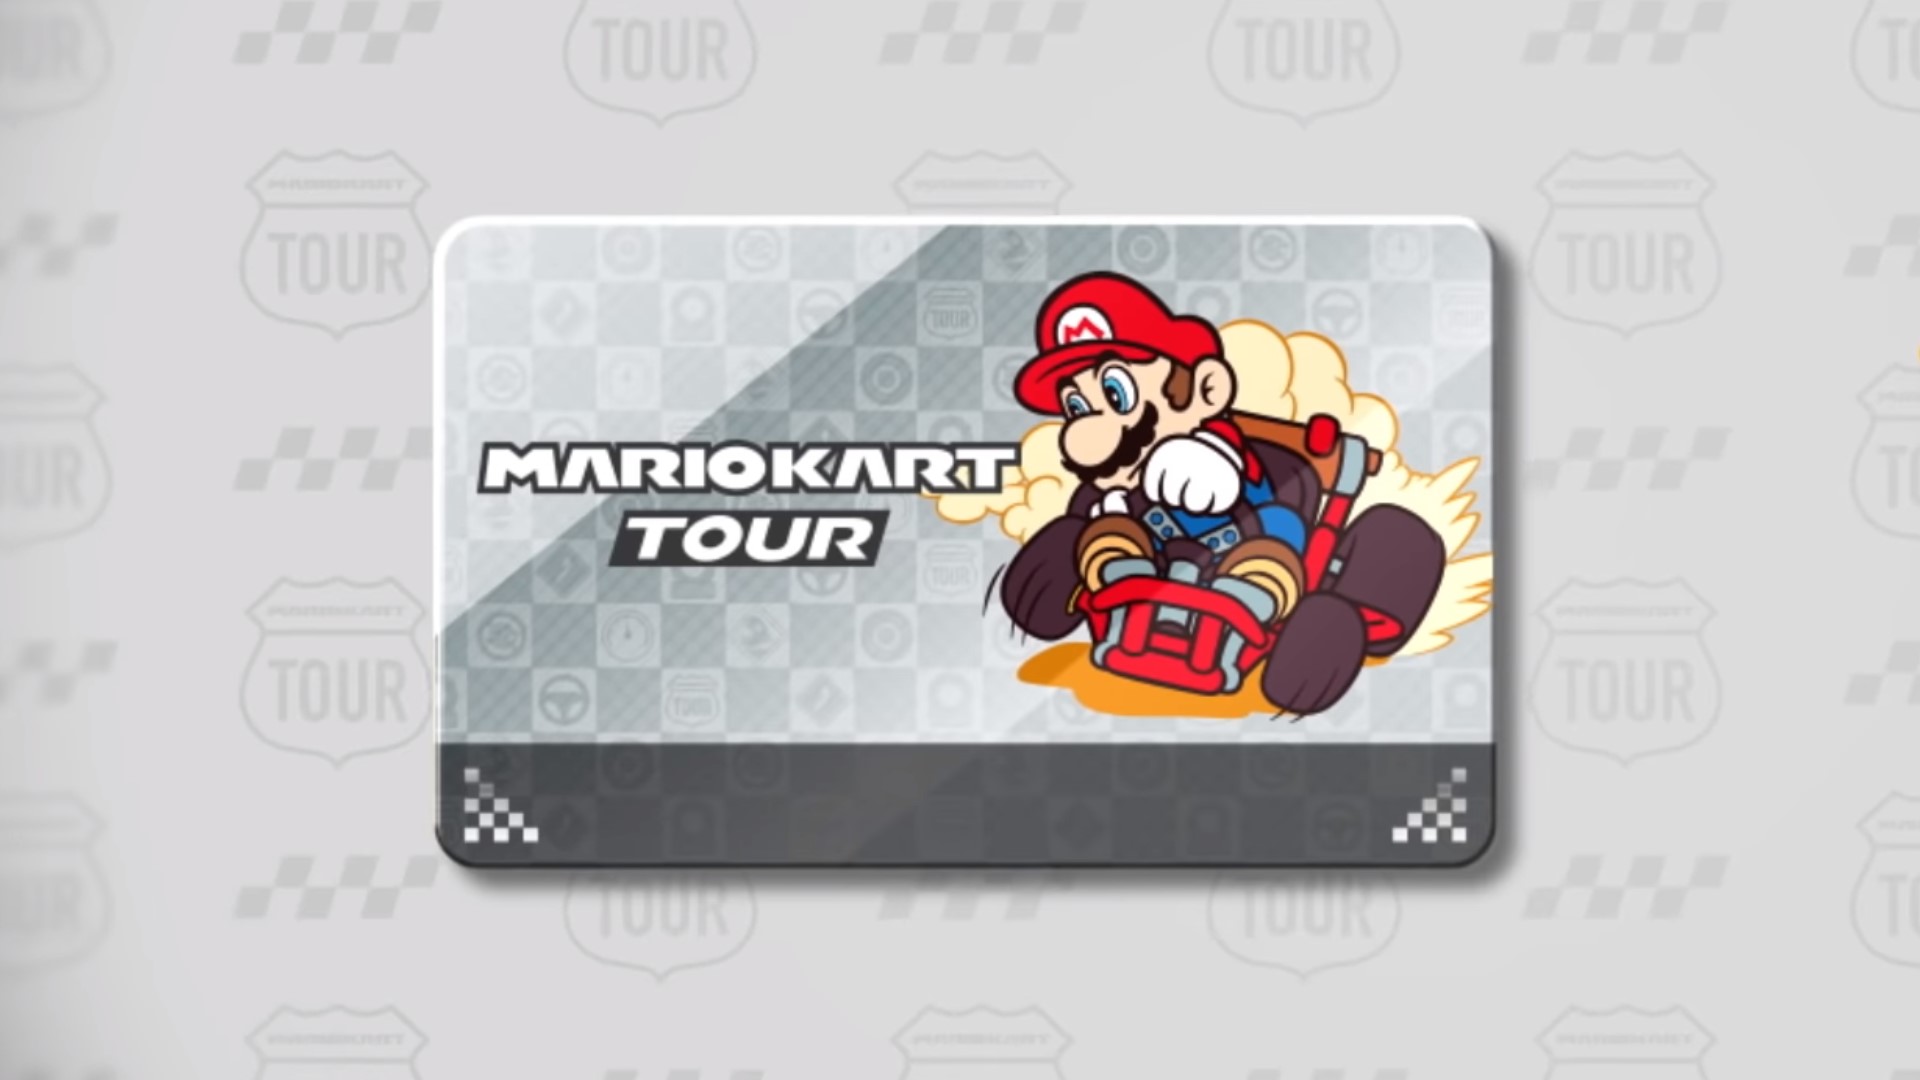 Mario Kart Tour registration card